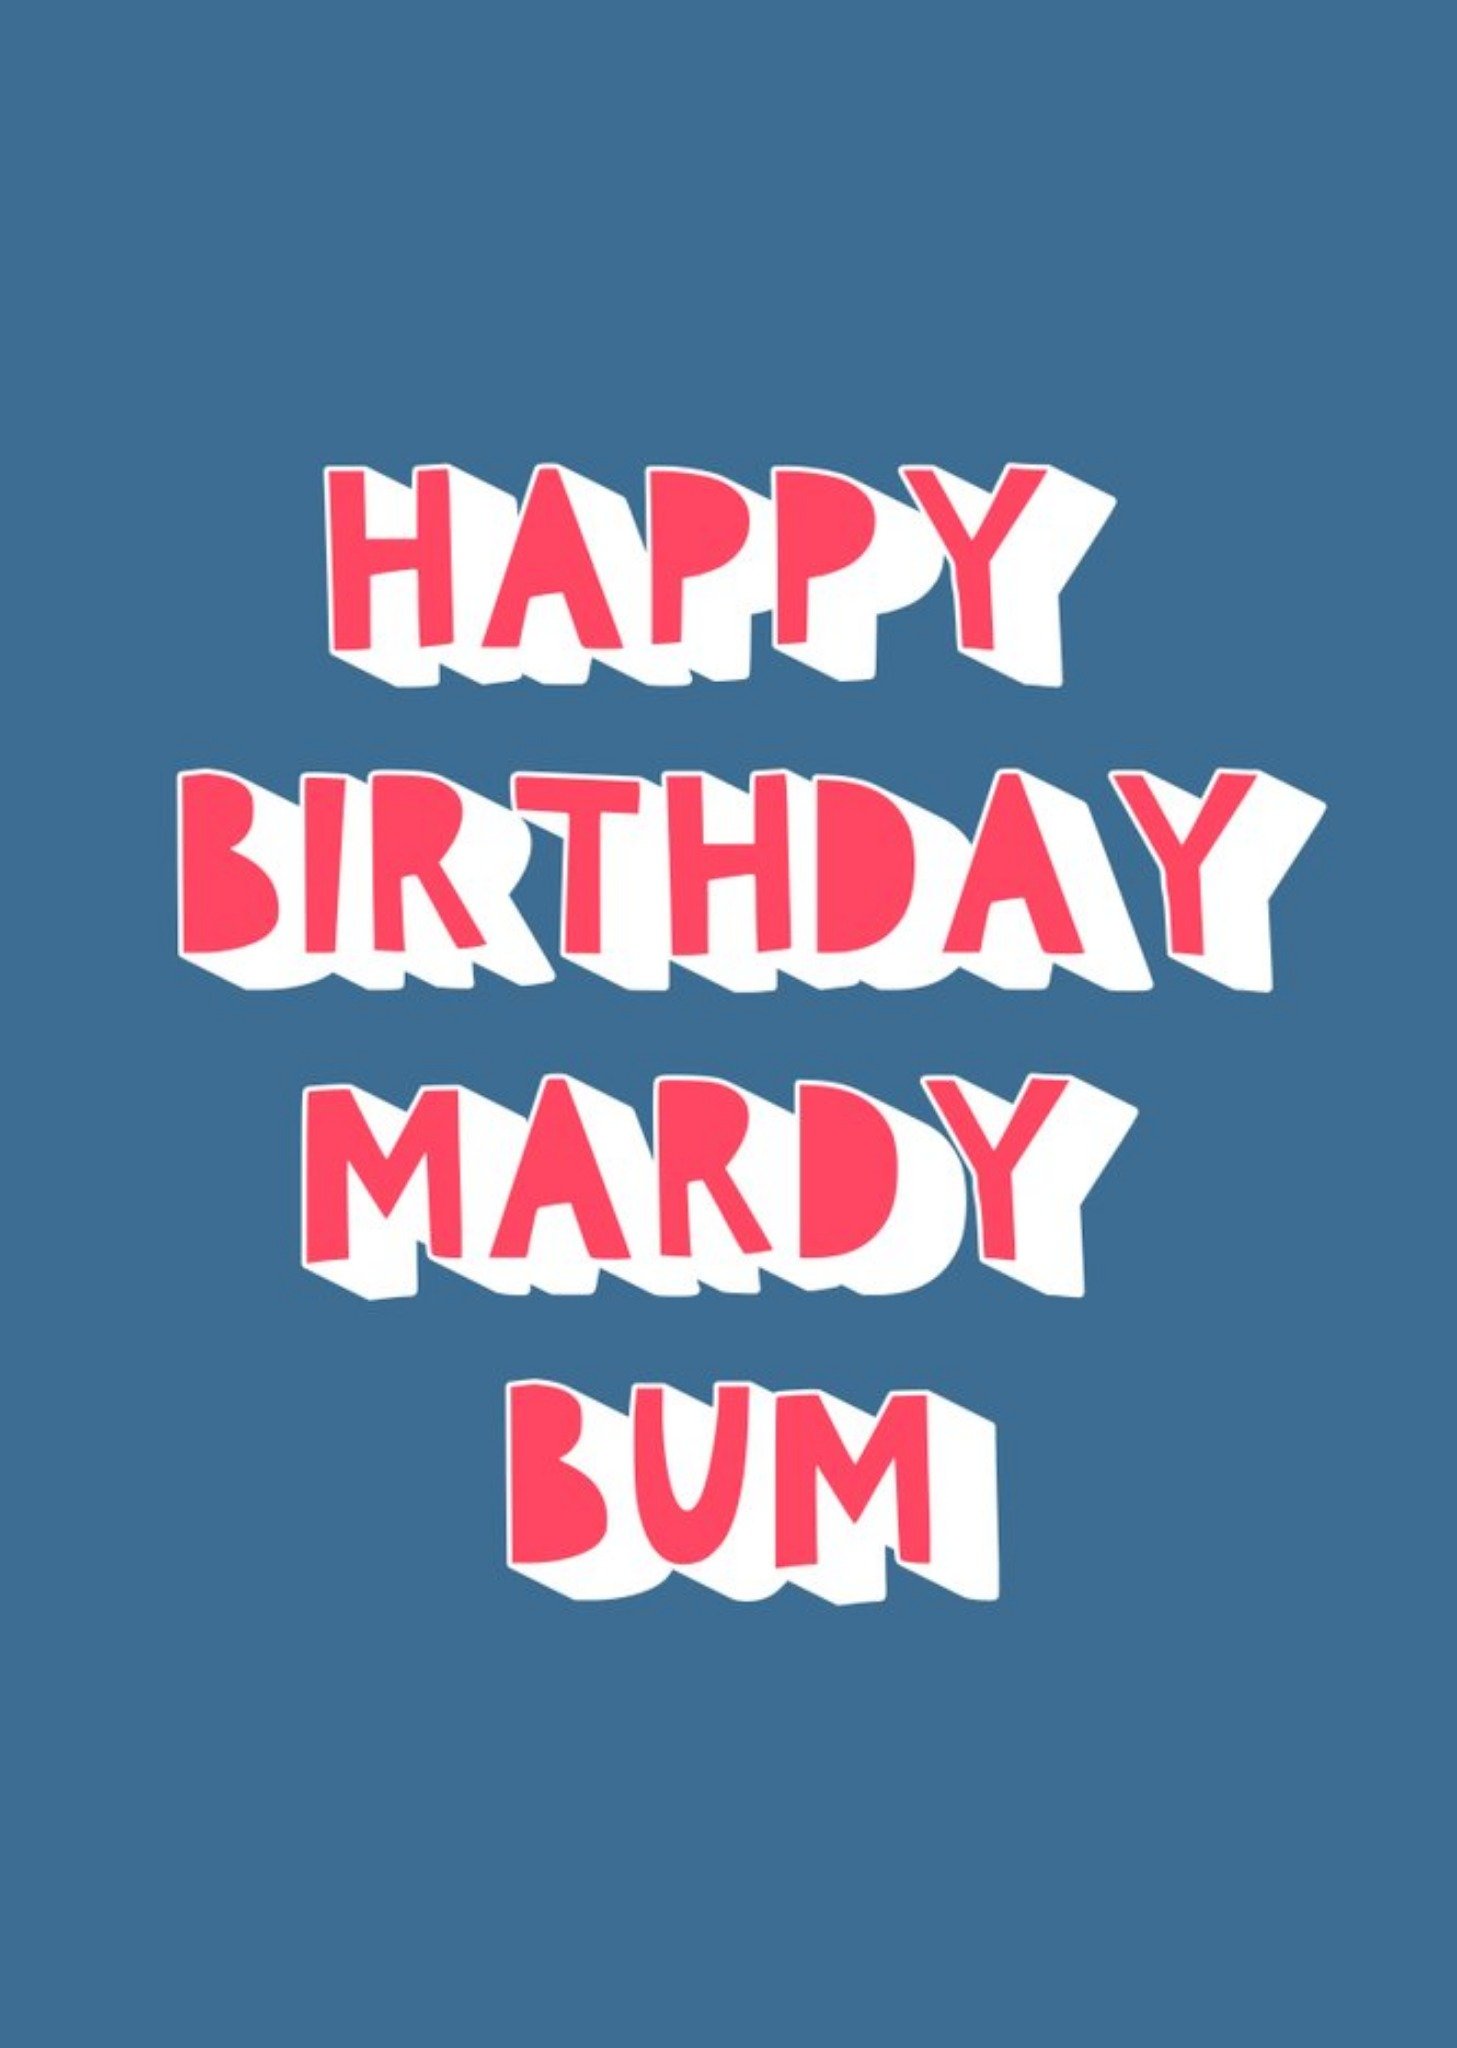 Moonpig Typographic Mardy Bum Birthday Card, Large